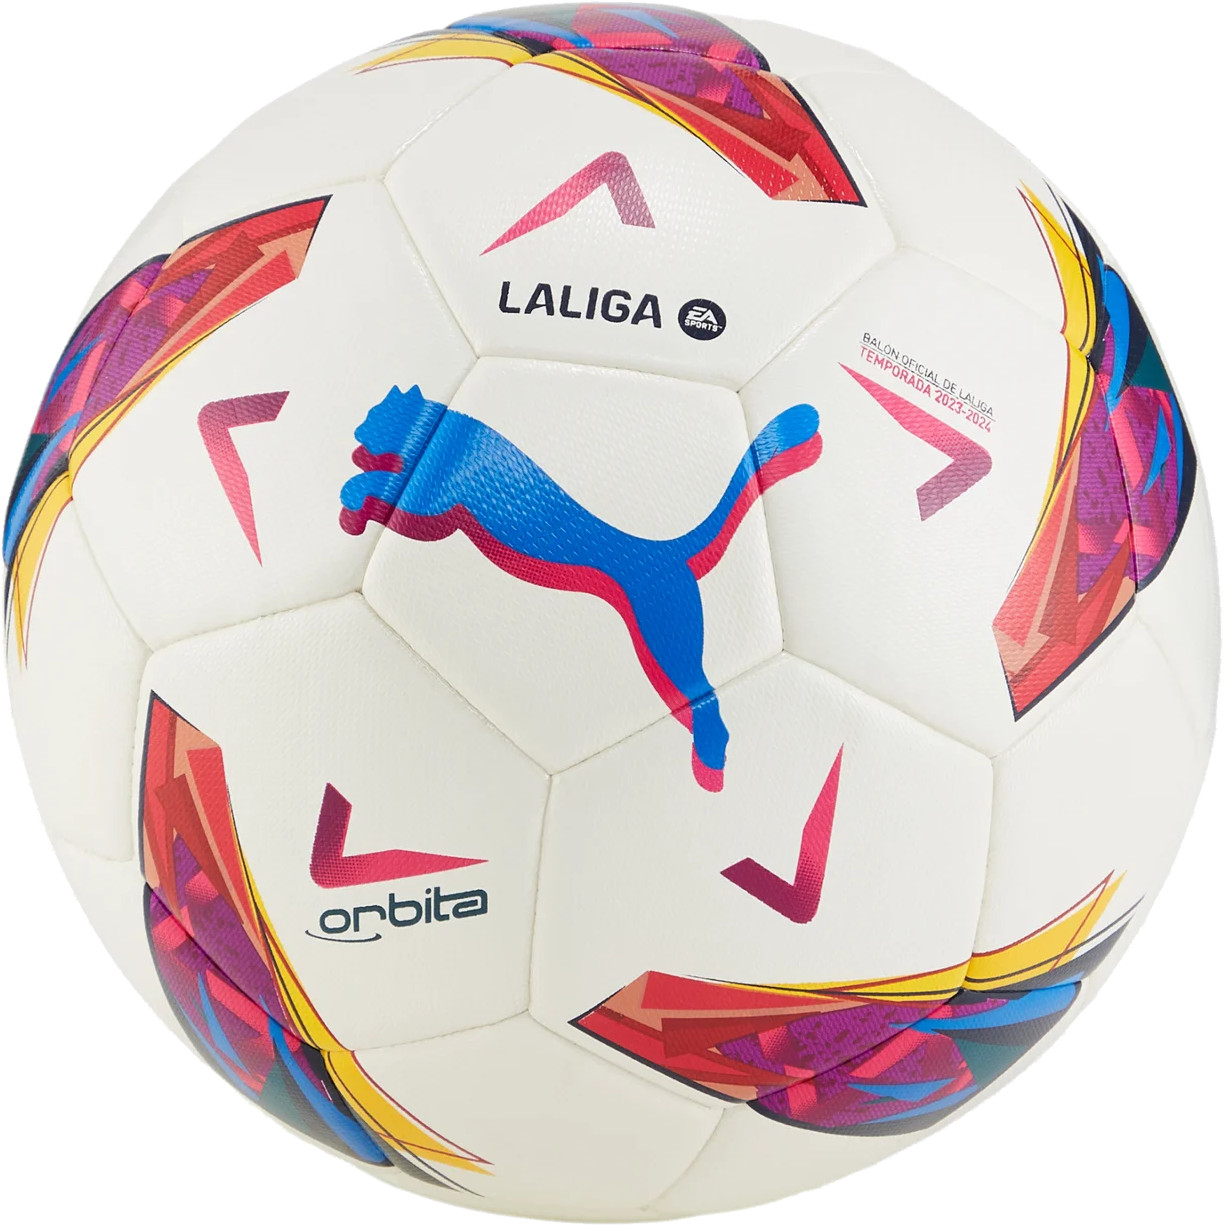 Bola Puma Orbita LaLiga 1 Hybrid Trainingsball